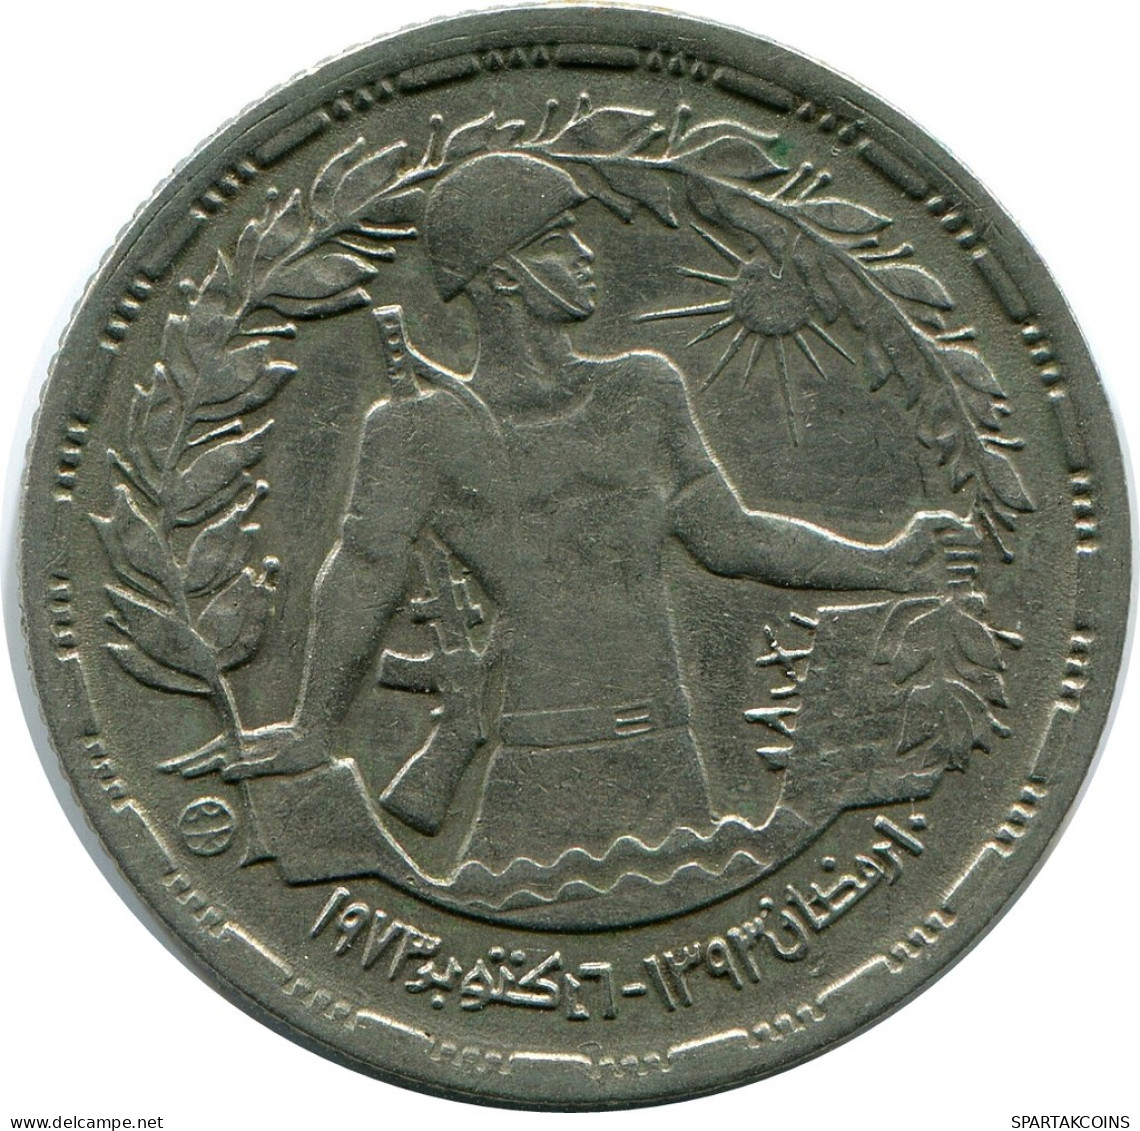 5 QIRSH 1974 EGYPT Islamic Coin #AP152.U - Egypt